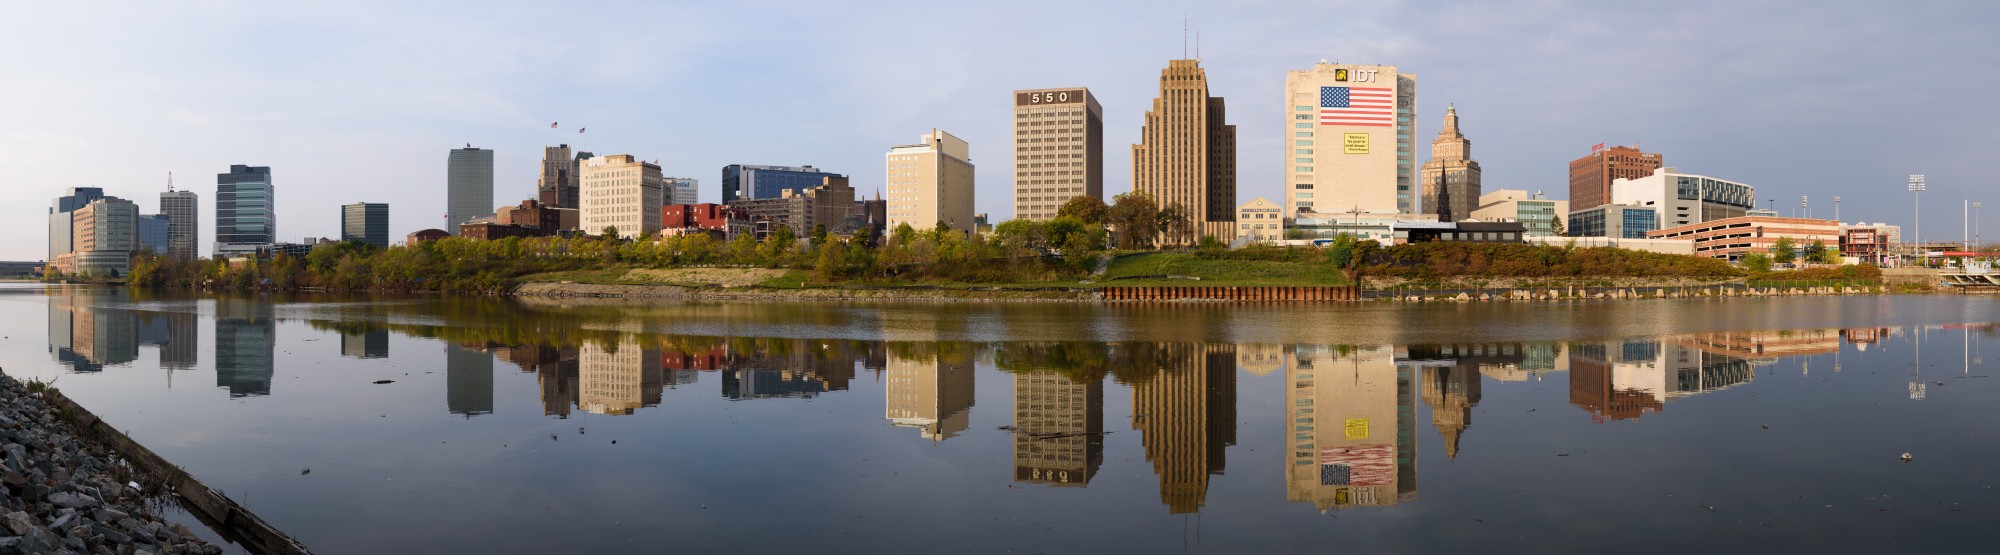 Newark October 2016 panorama